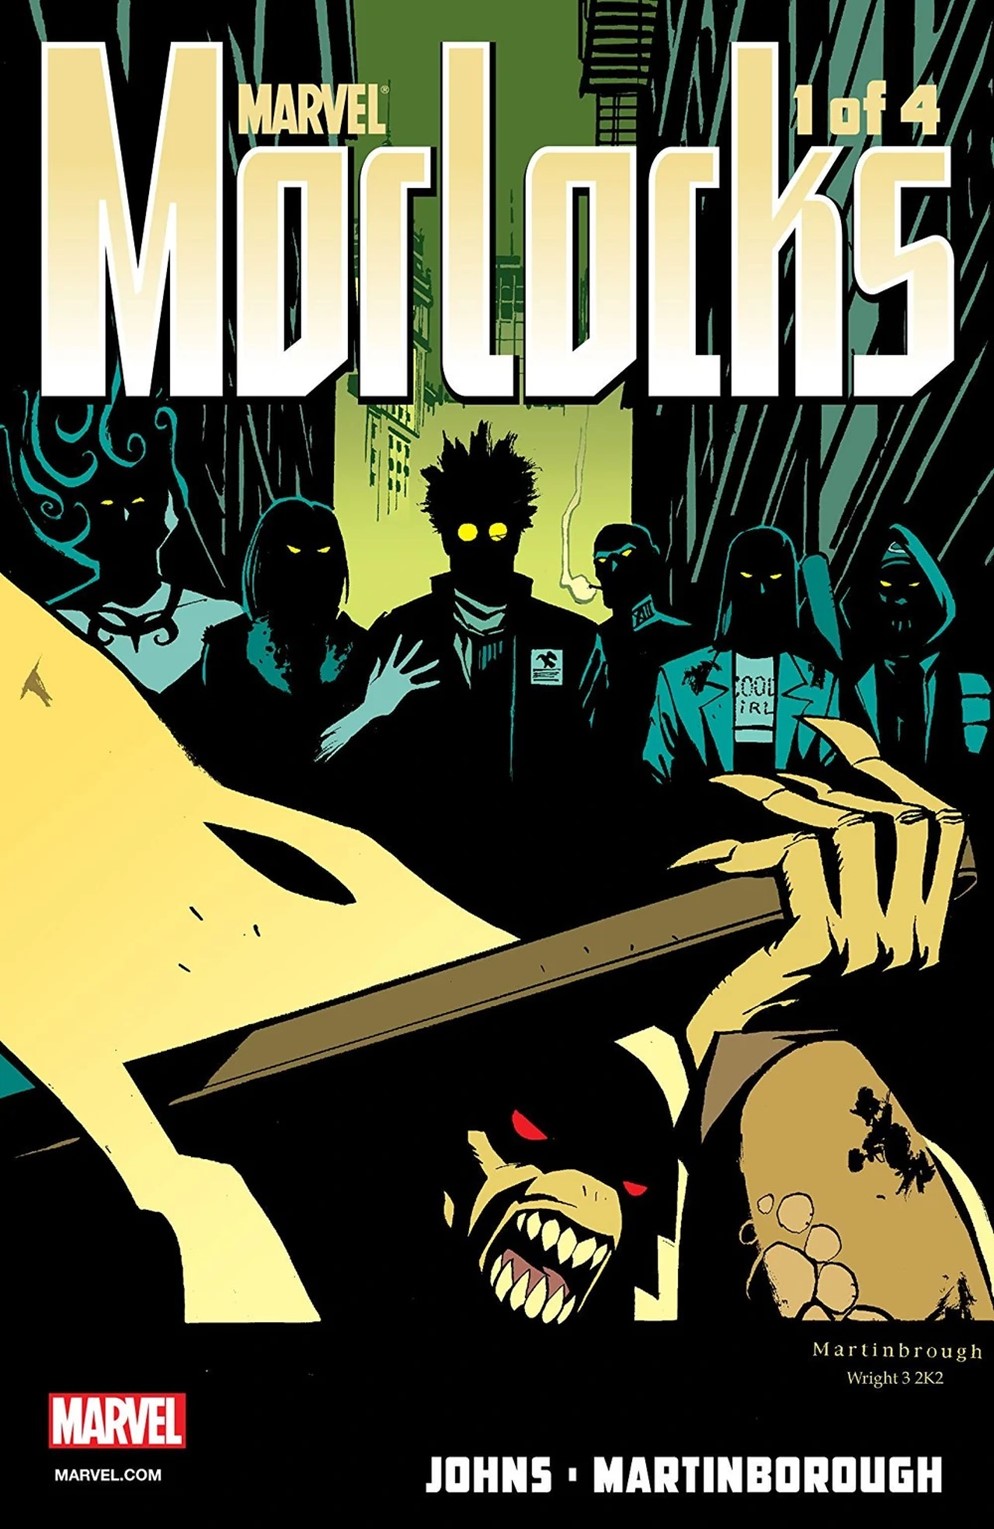 Morlocks Limited Series Bundle Issues 1-4